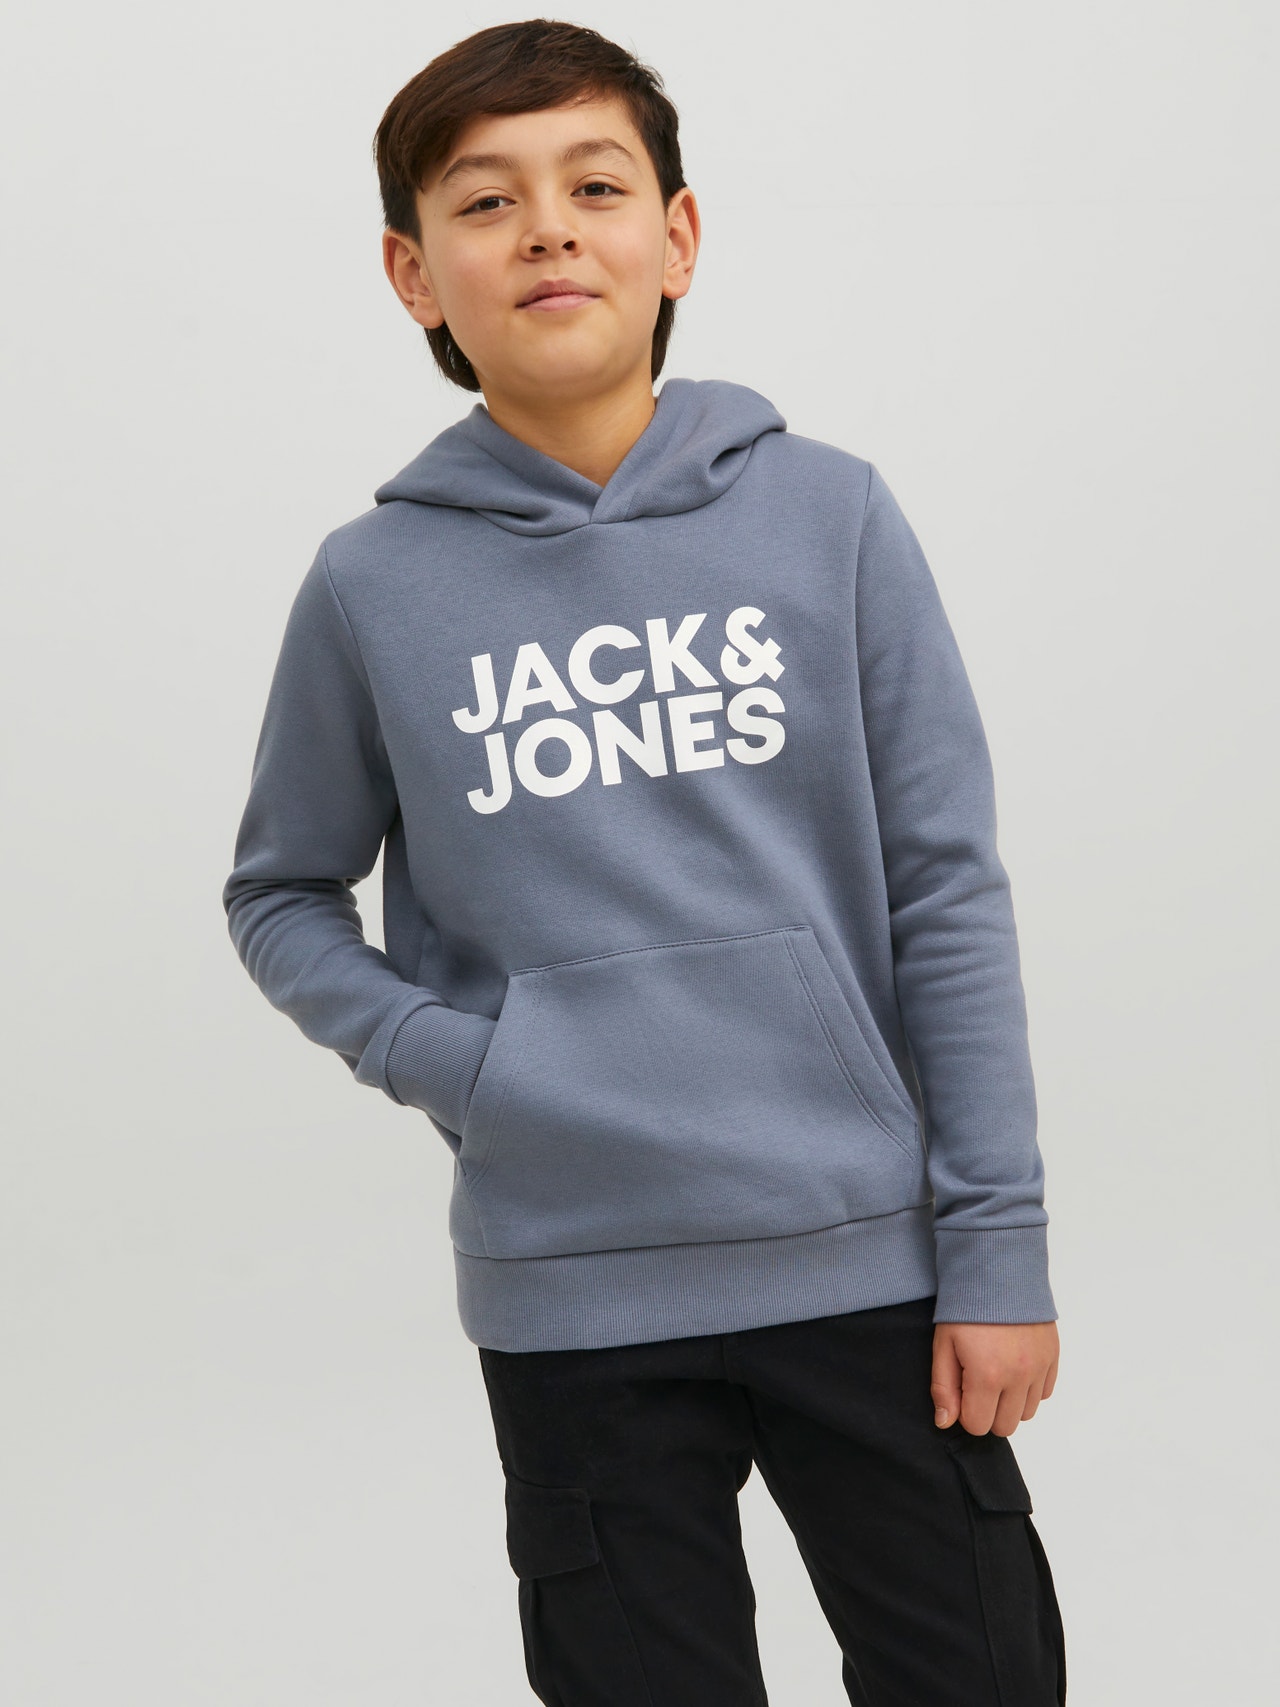 Jack & Jones Logo Hoodie For boys -Flint Stone - 12152841